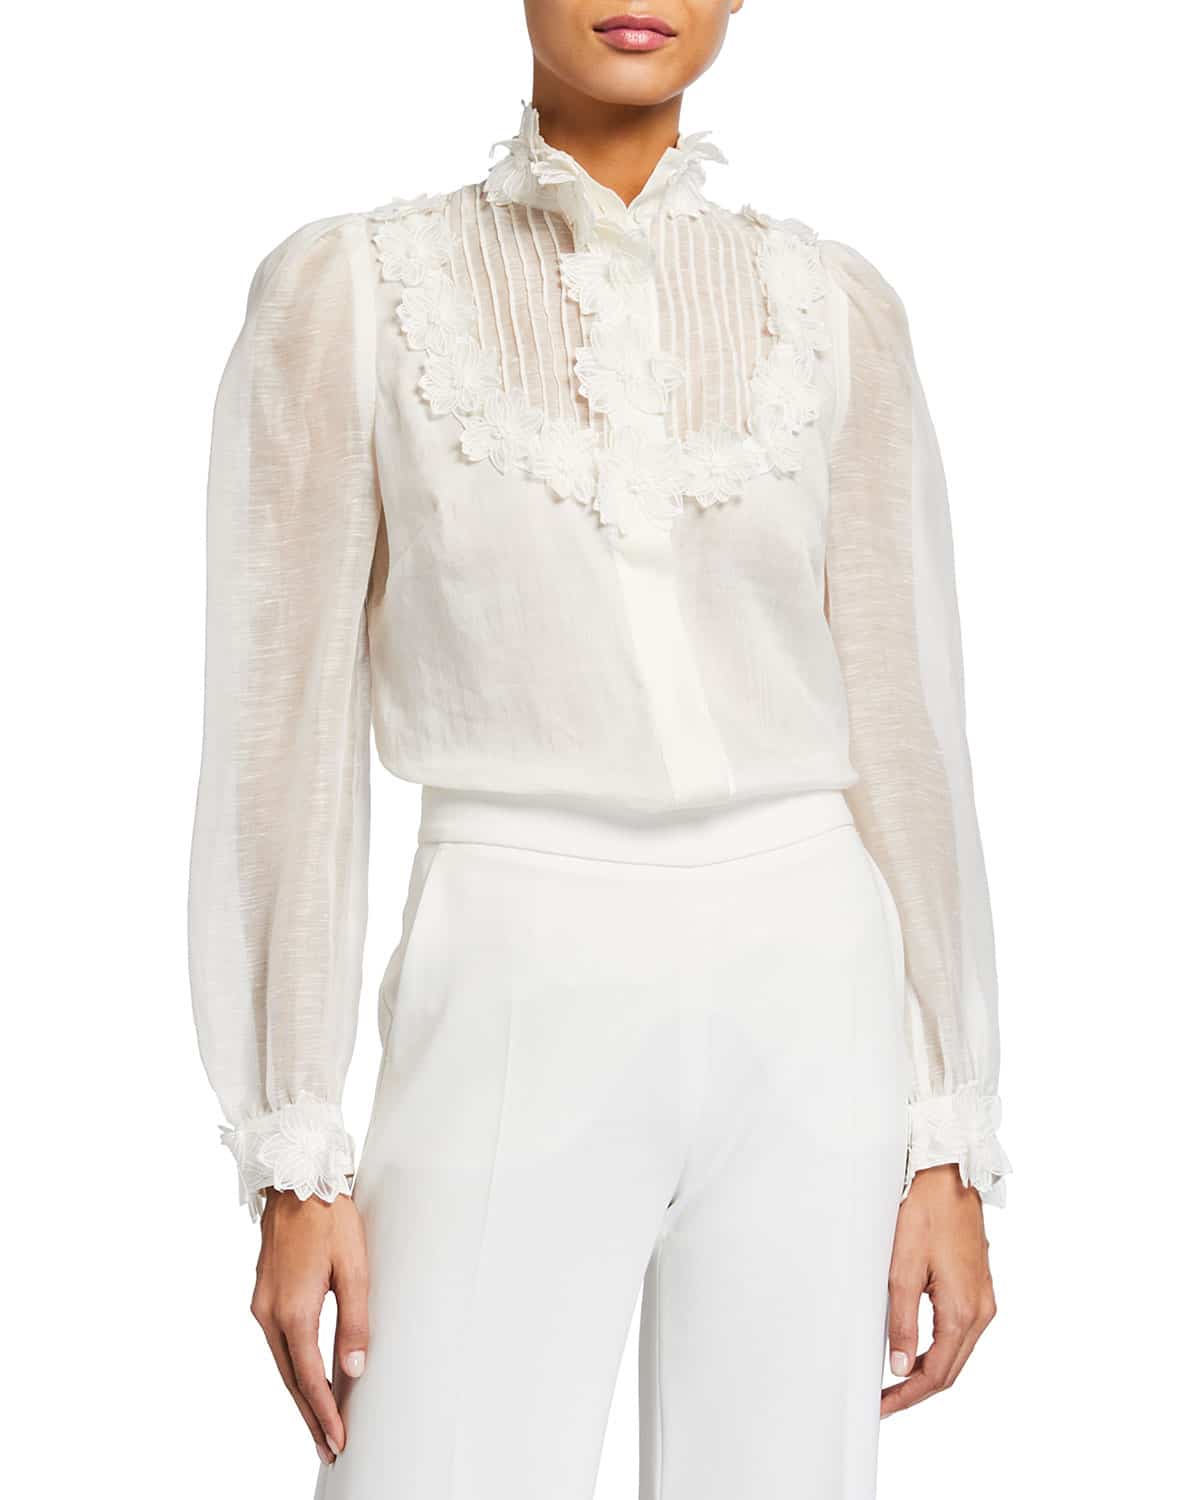 Neiman Marcus blouse